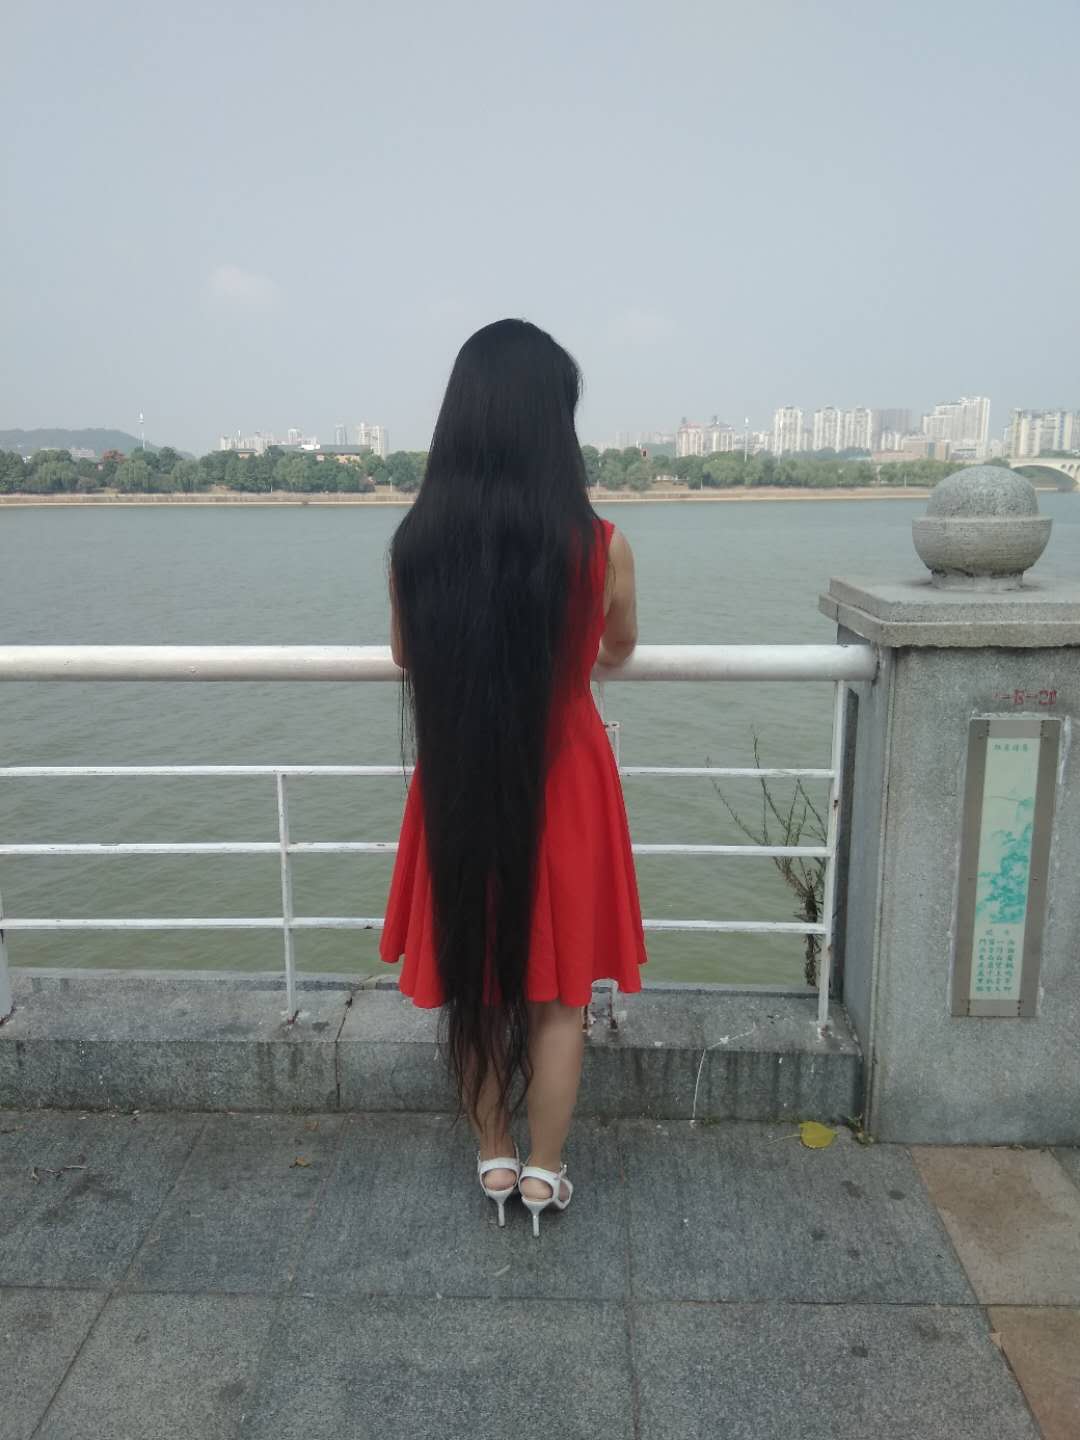 Calf length long hair with red skirt near river